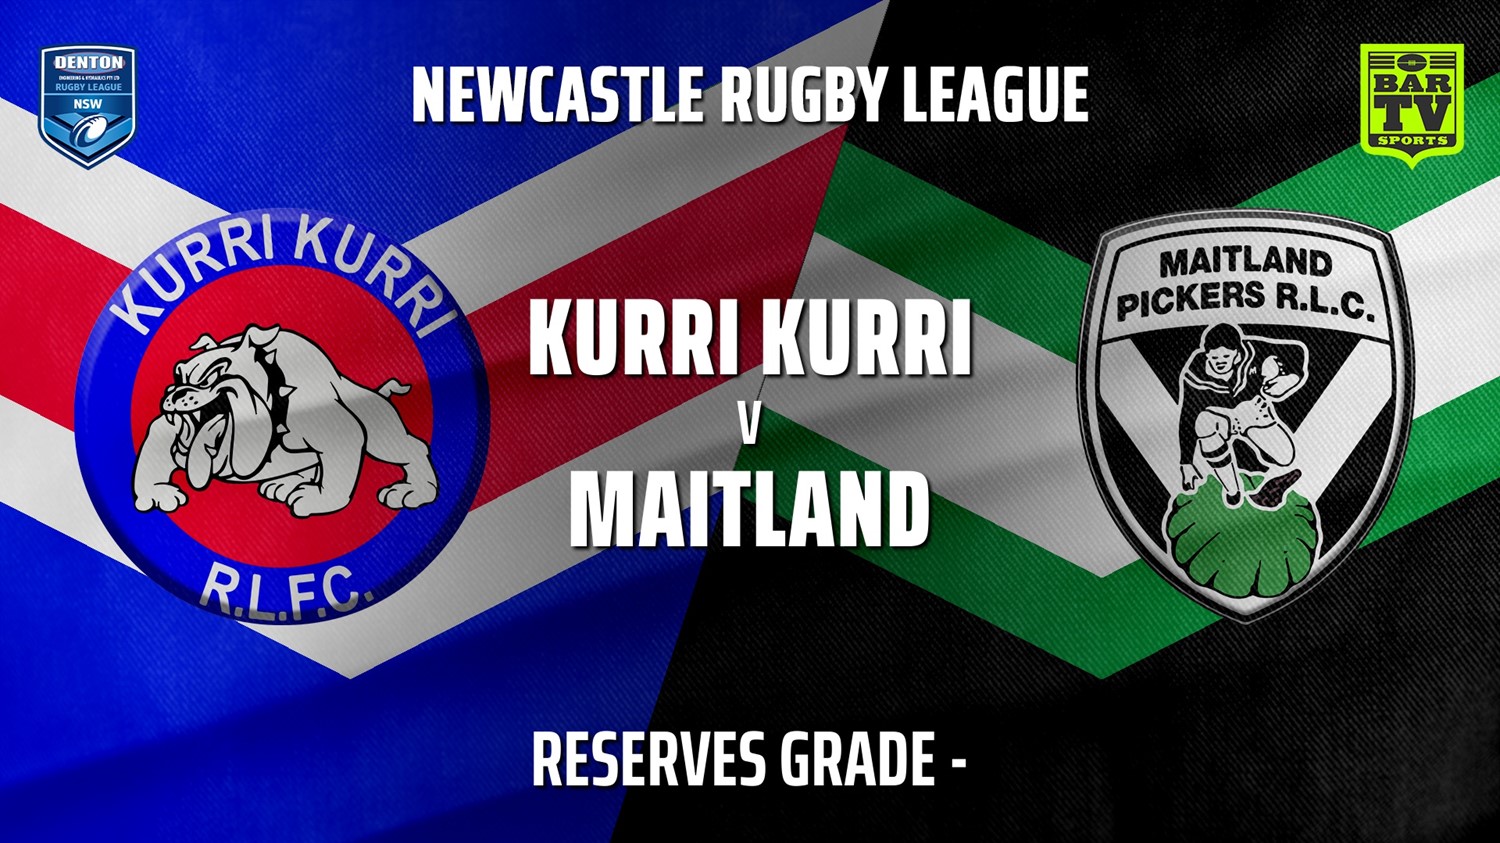 210627-Newcastle Reserves Grade - Kurri Kurri Bulldogs v Maitland Pickers Slate Image